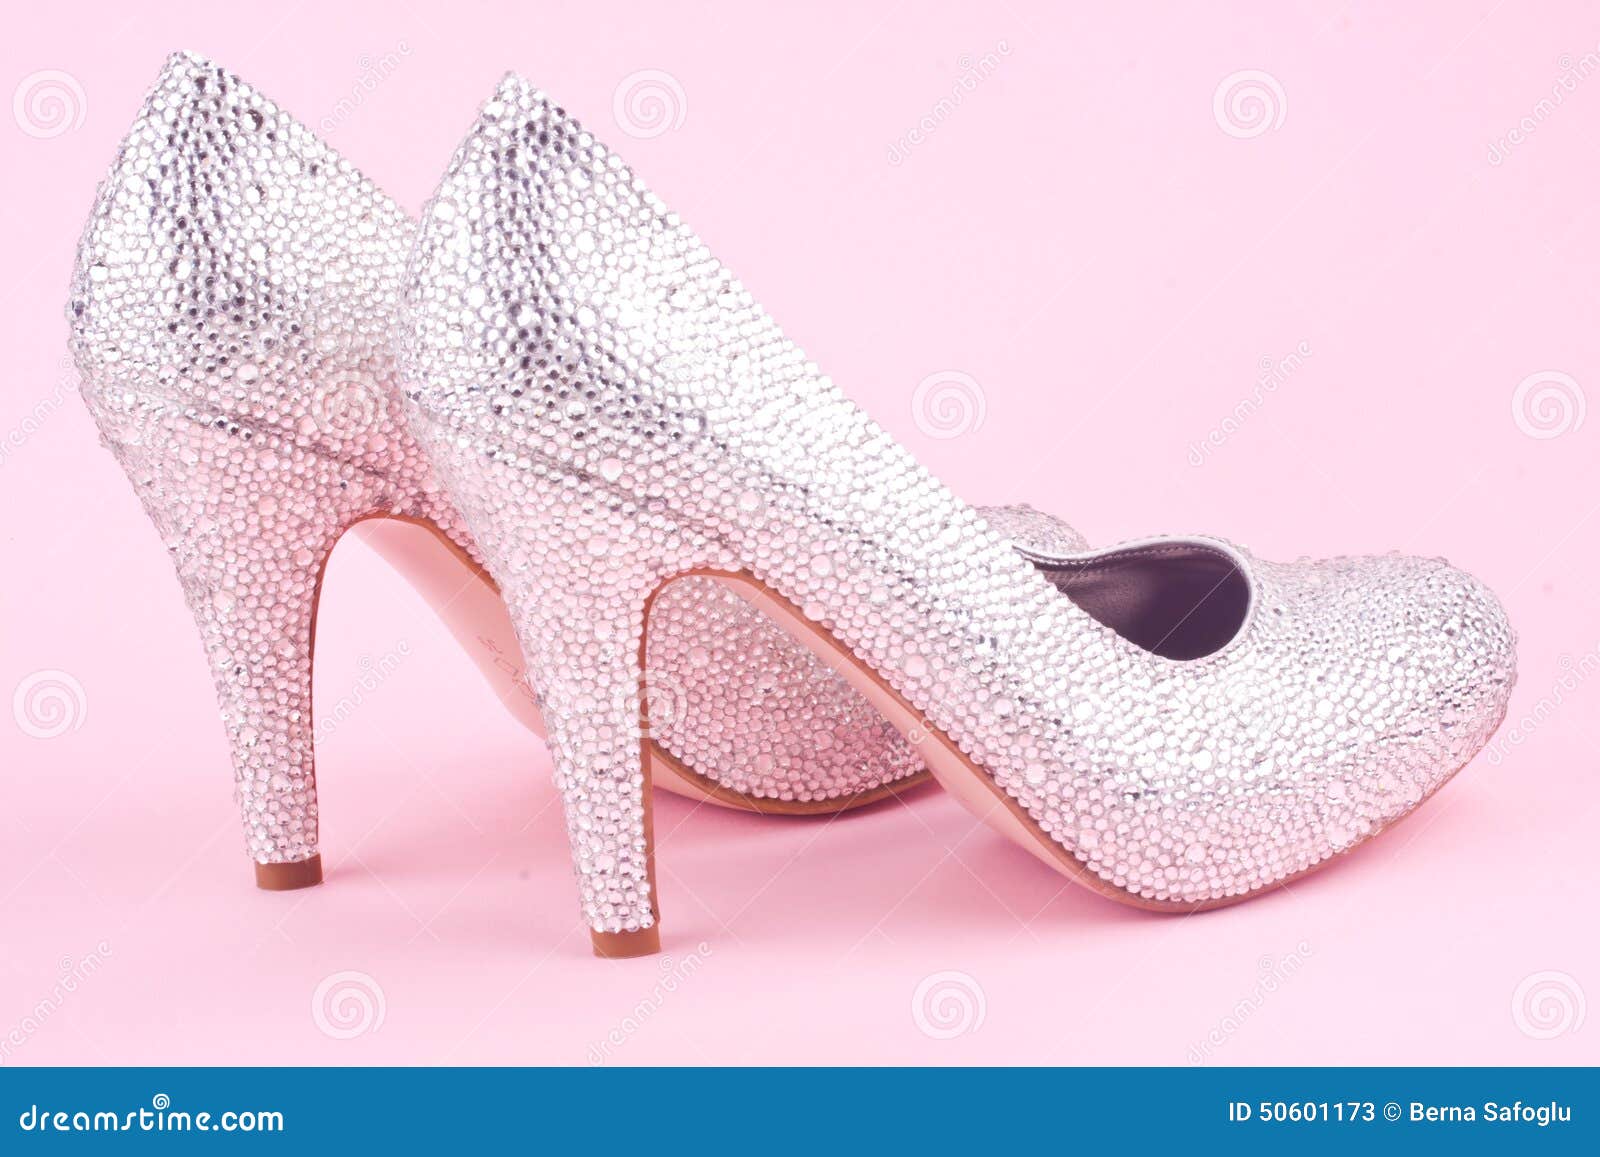 Shiny High Heel Shoes with Rhinestones Stock Image - Image of ...